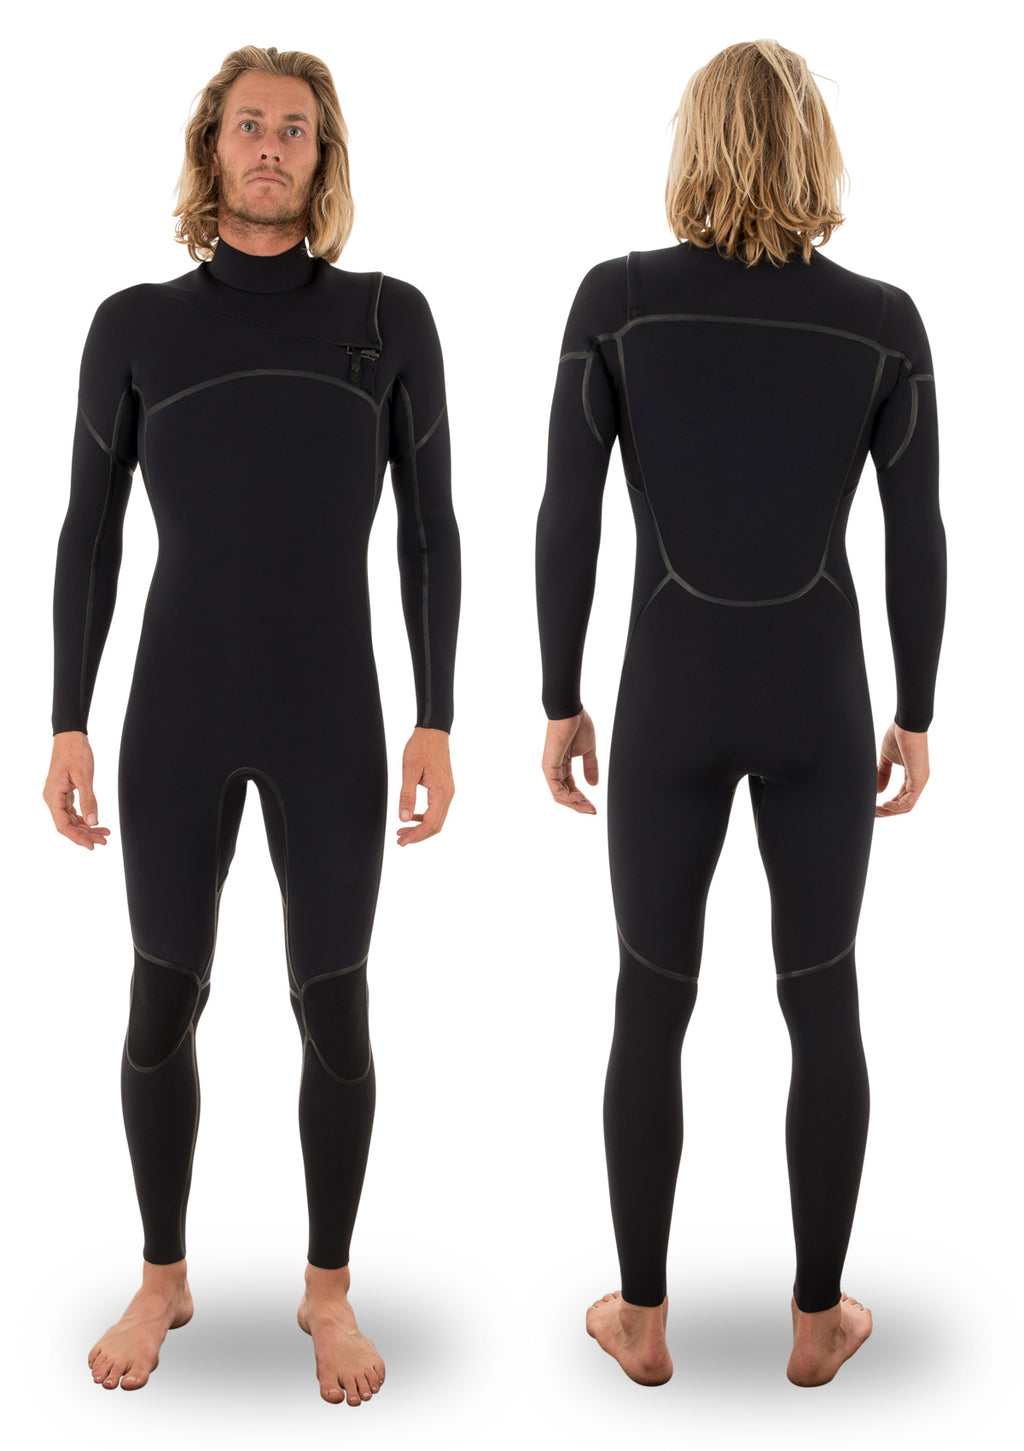 needessentials 4/3 liquid taped thermal wetsuit torren martyn surfing winter black non branded